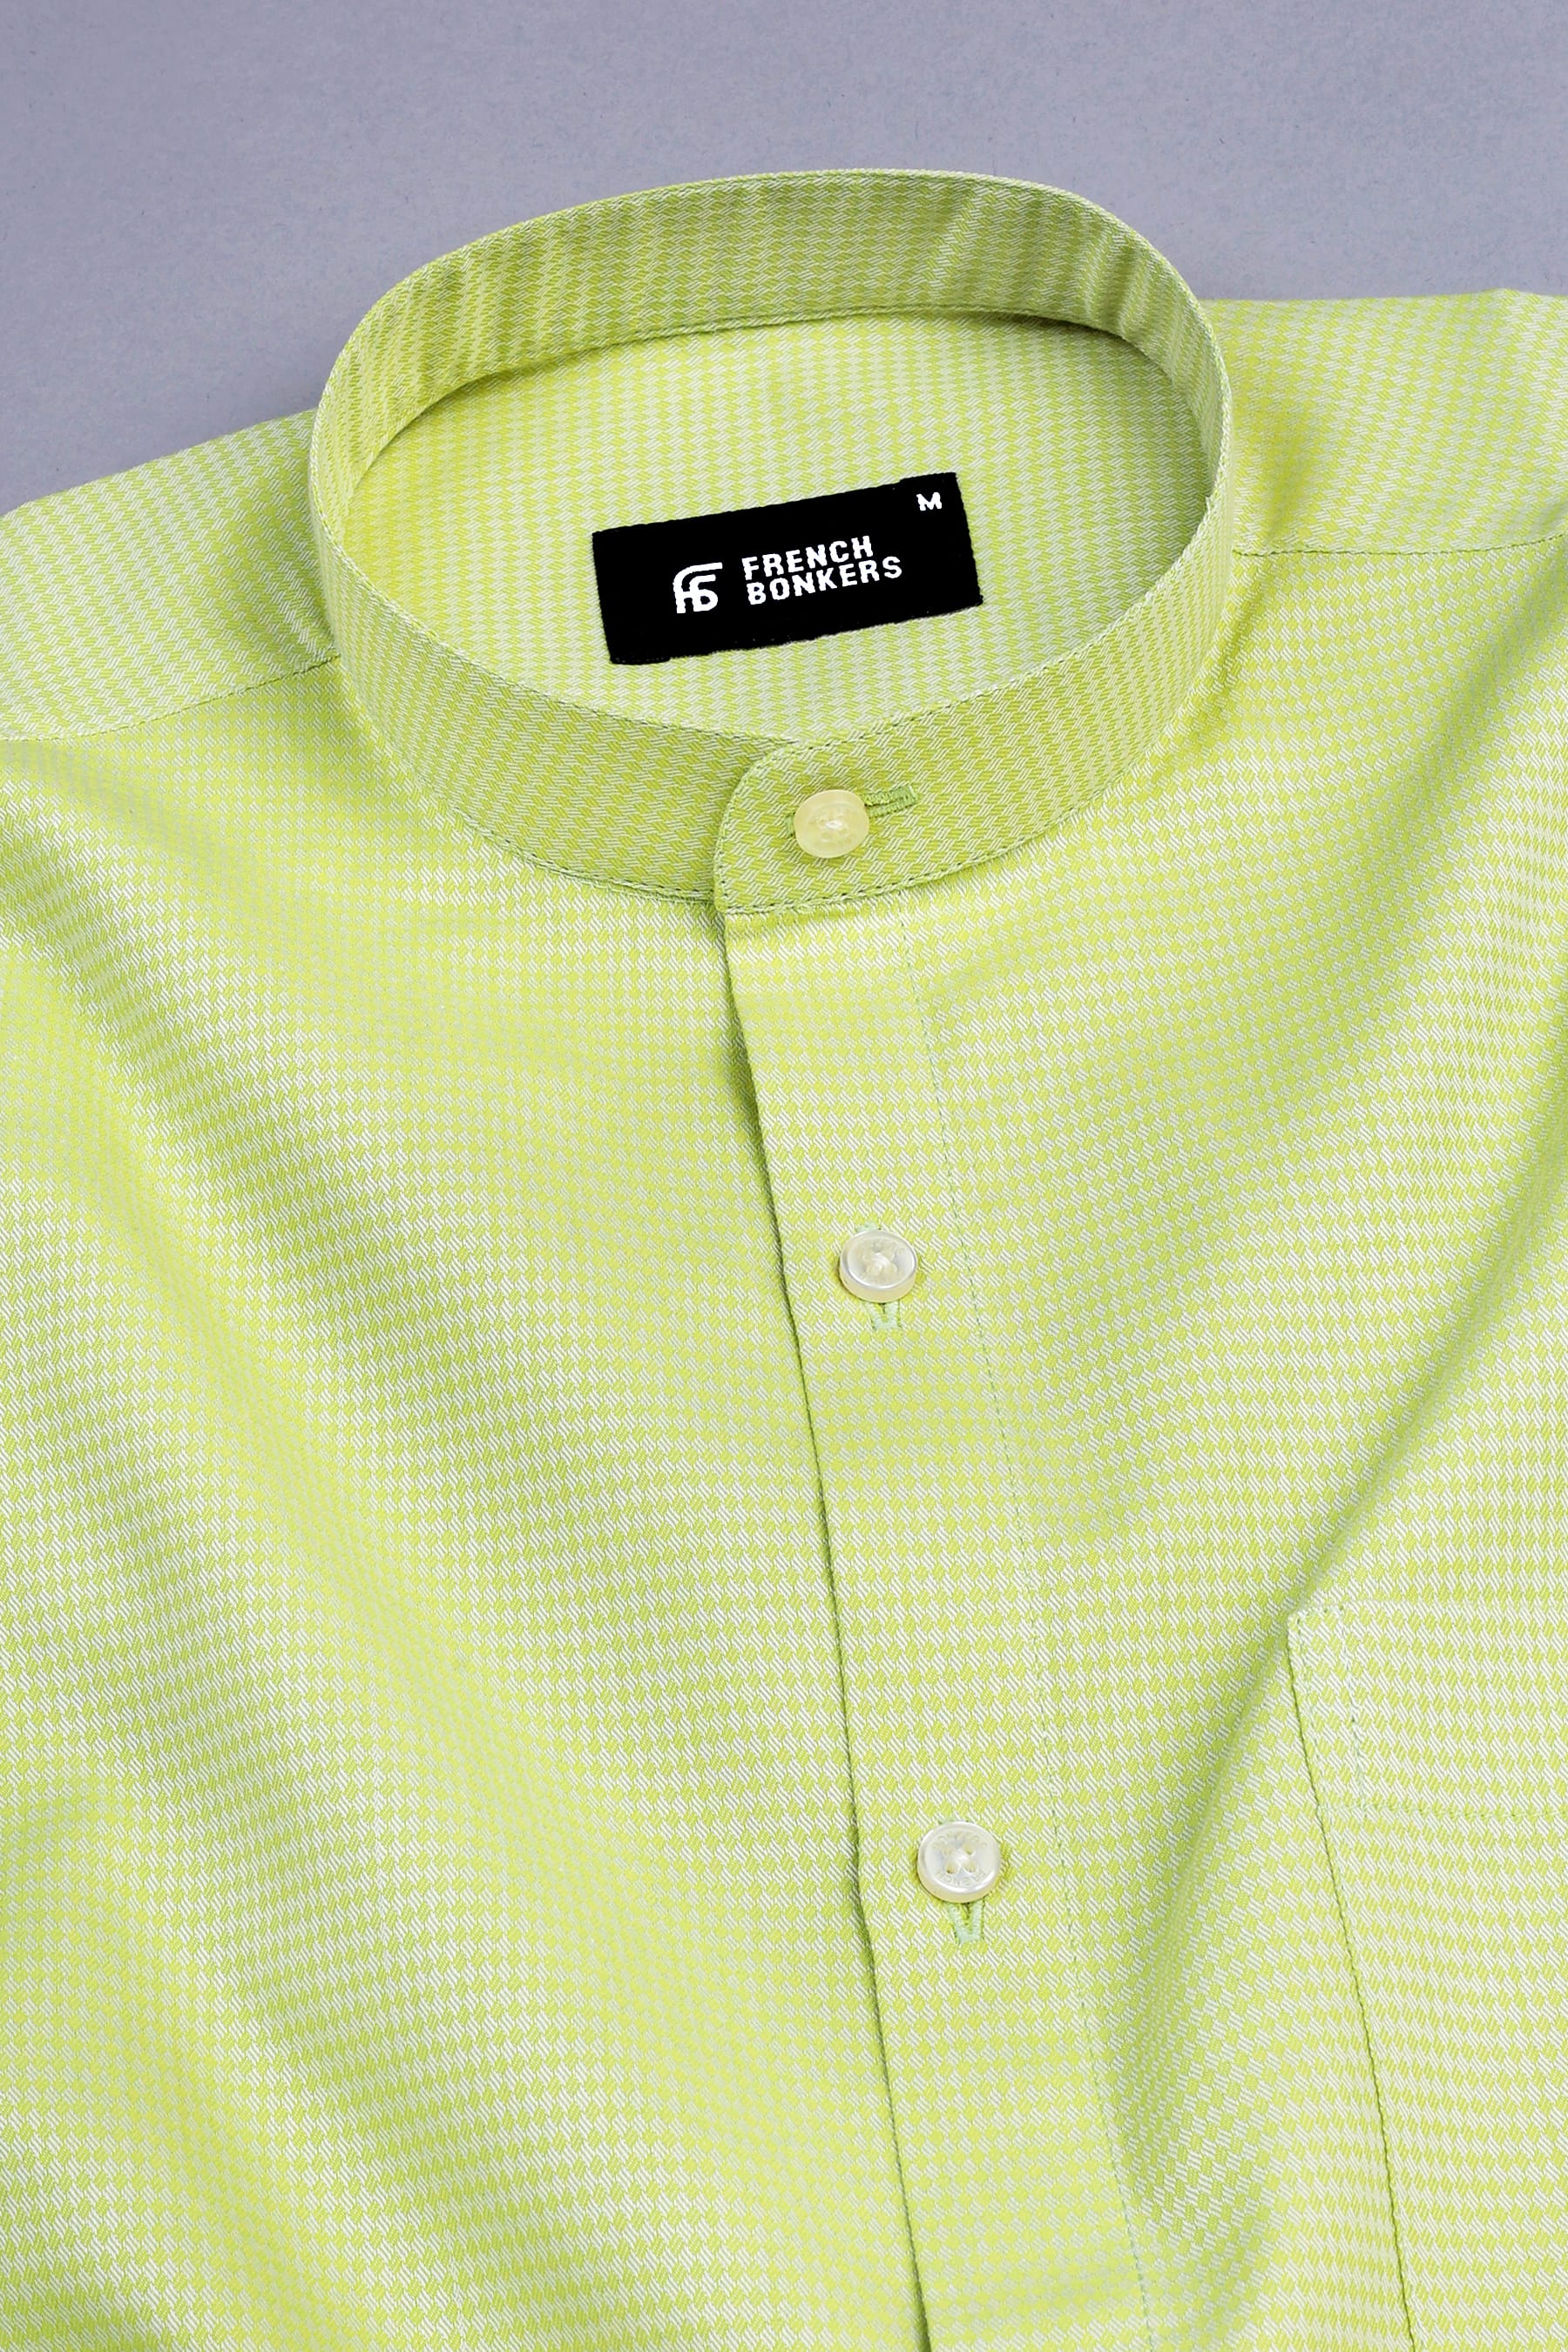 Chartreuse green  jacquard printed shirt